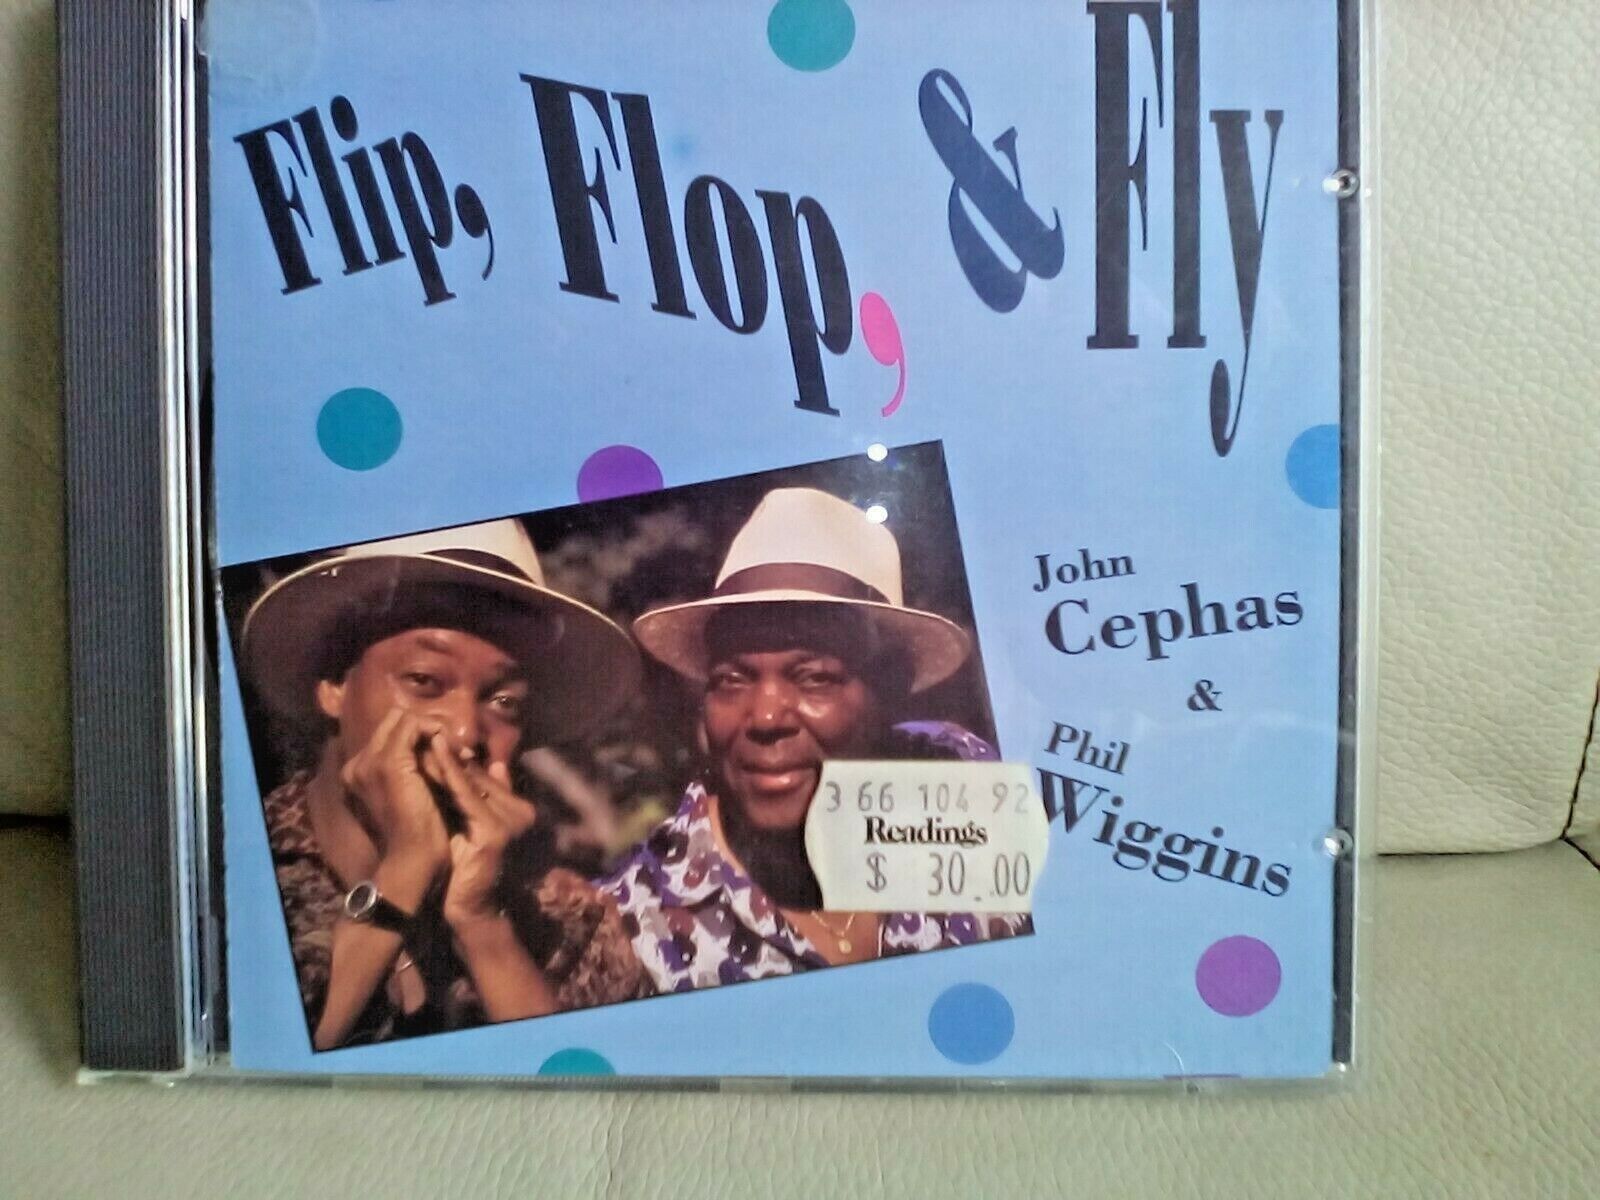 CD1 X  1CD  FLIP FLOP & FLY JOHN CEPHAS & PHIL WIGGINS 